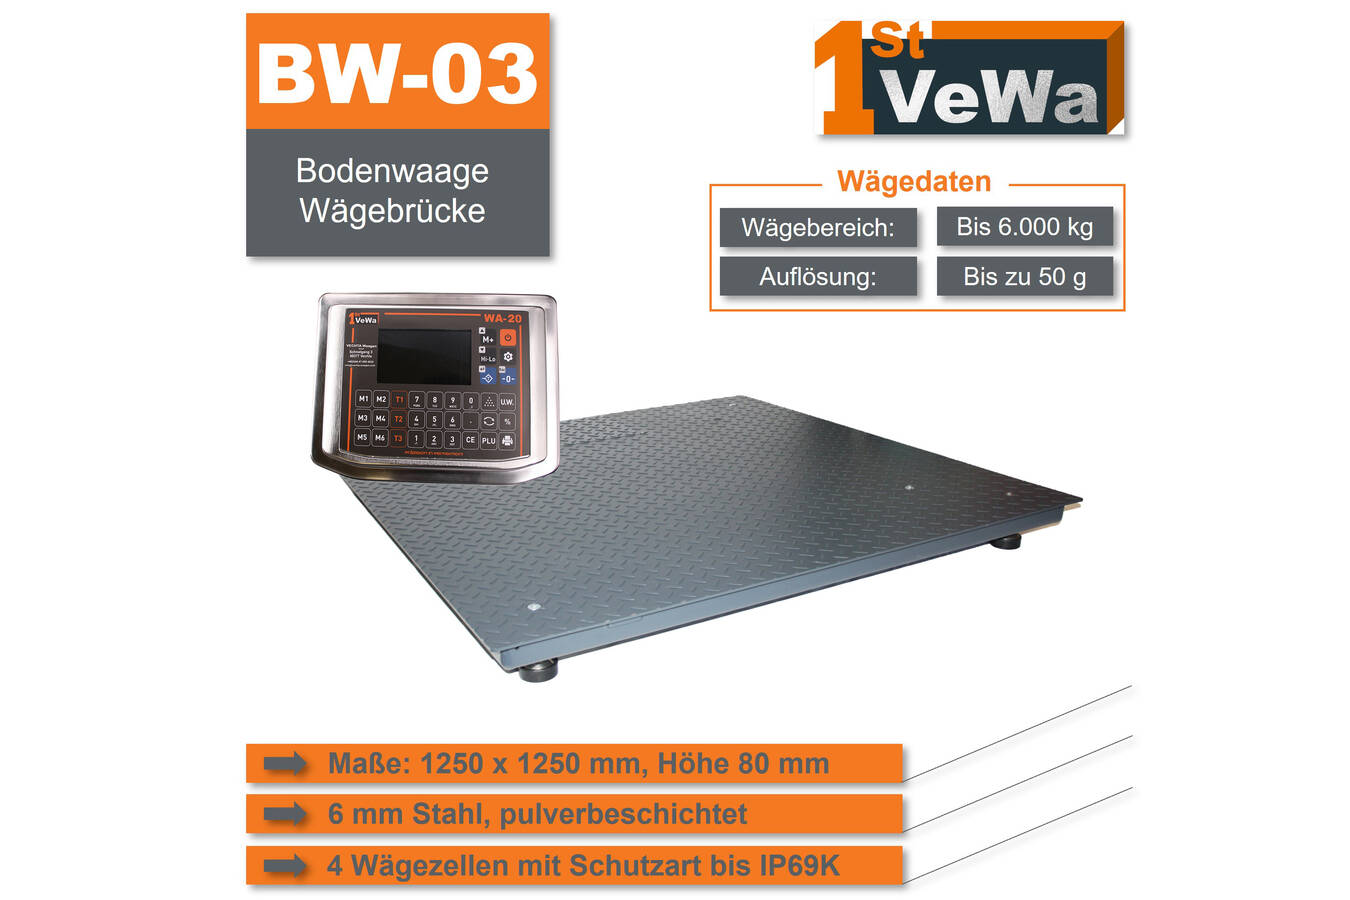 Bodenwaage BW-03